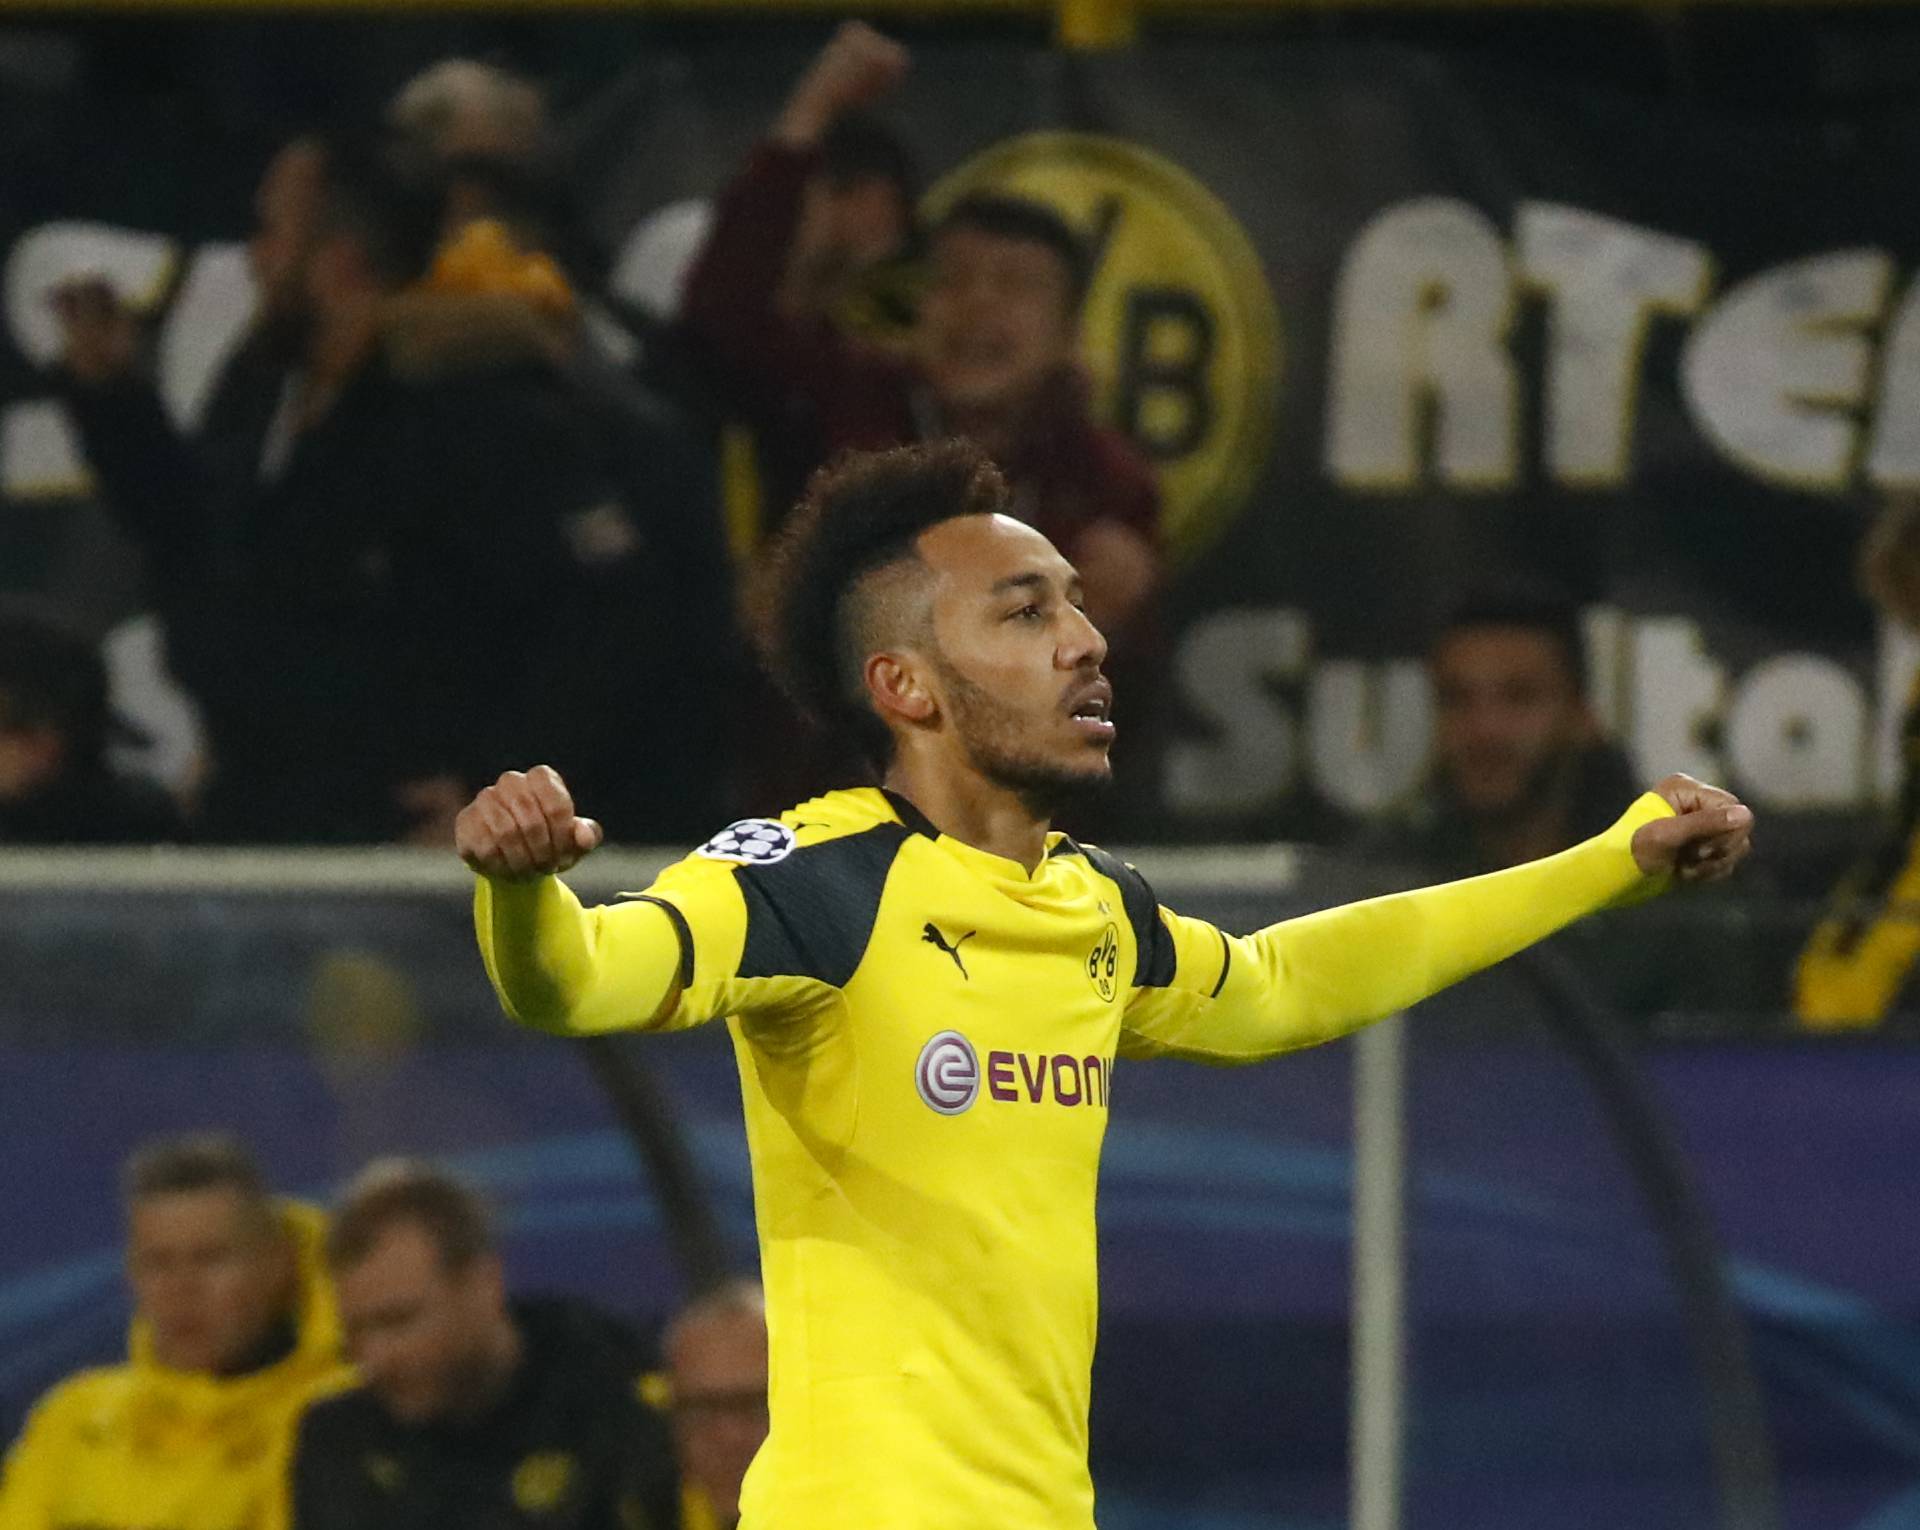 Borussia Dortmund's Pierre-Emerick Aubameyang celebrates scoring their third goal